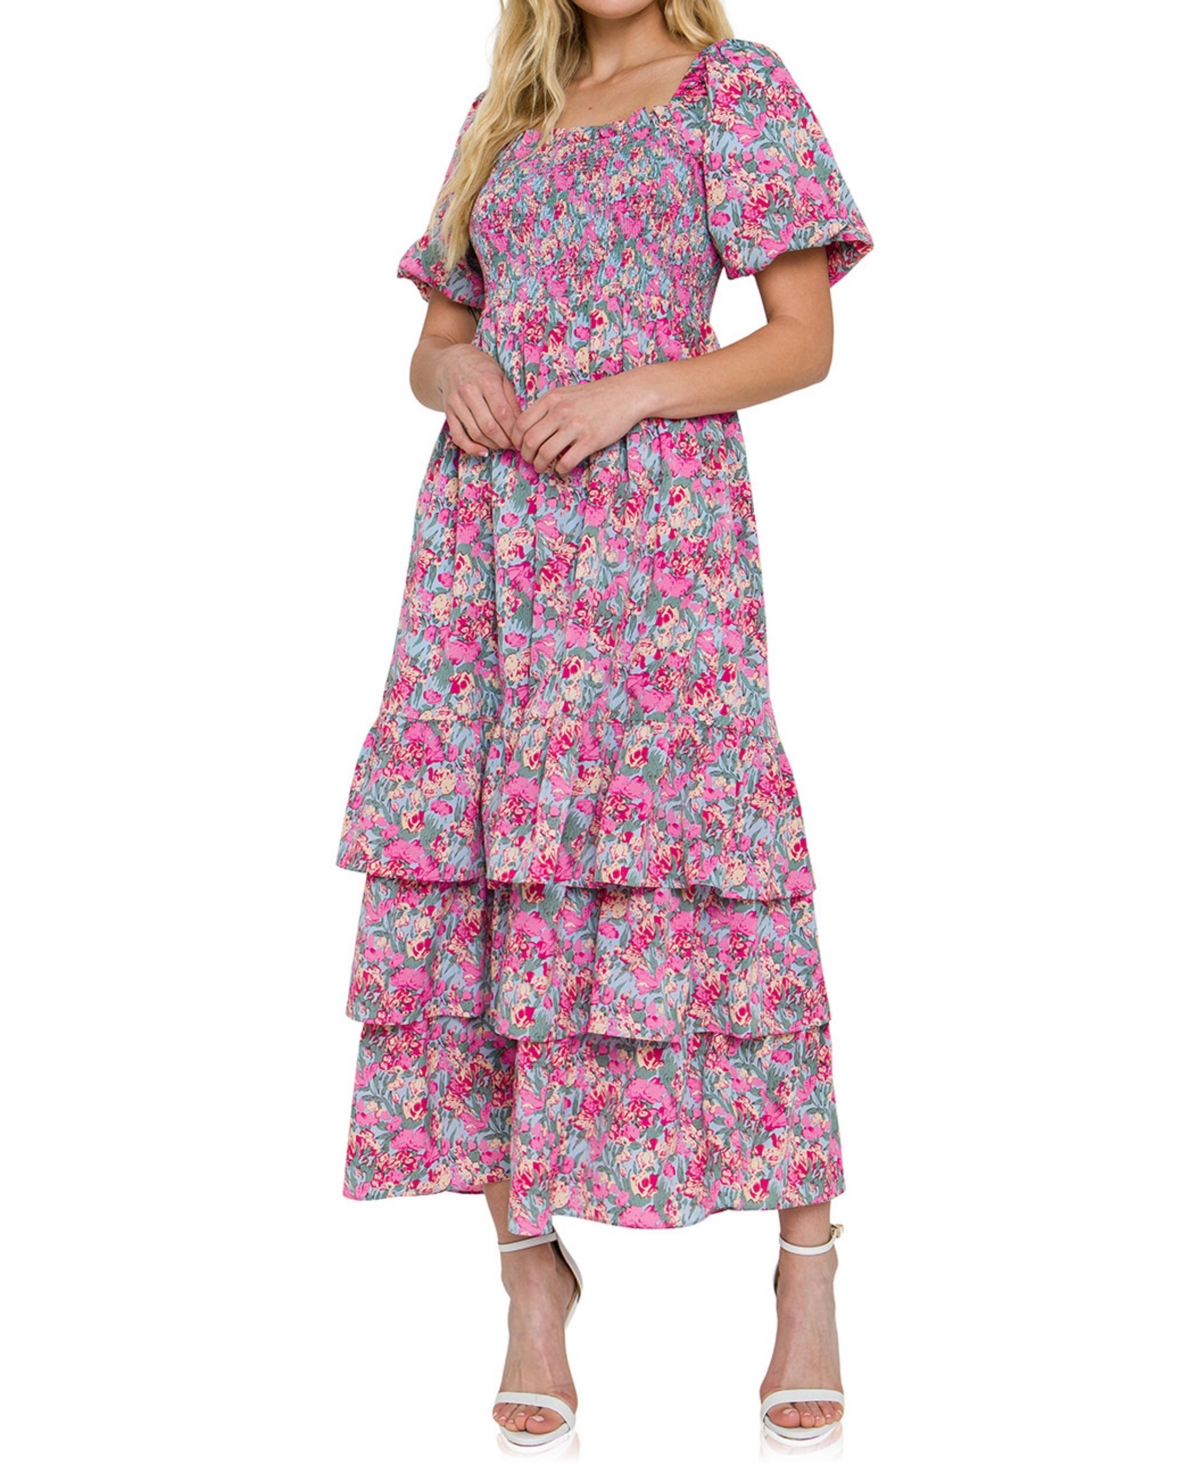 Women's Floral Print Maxi Dress - Pink multi